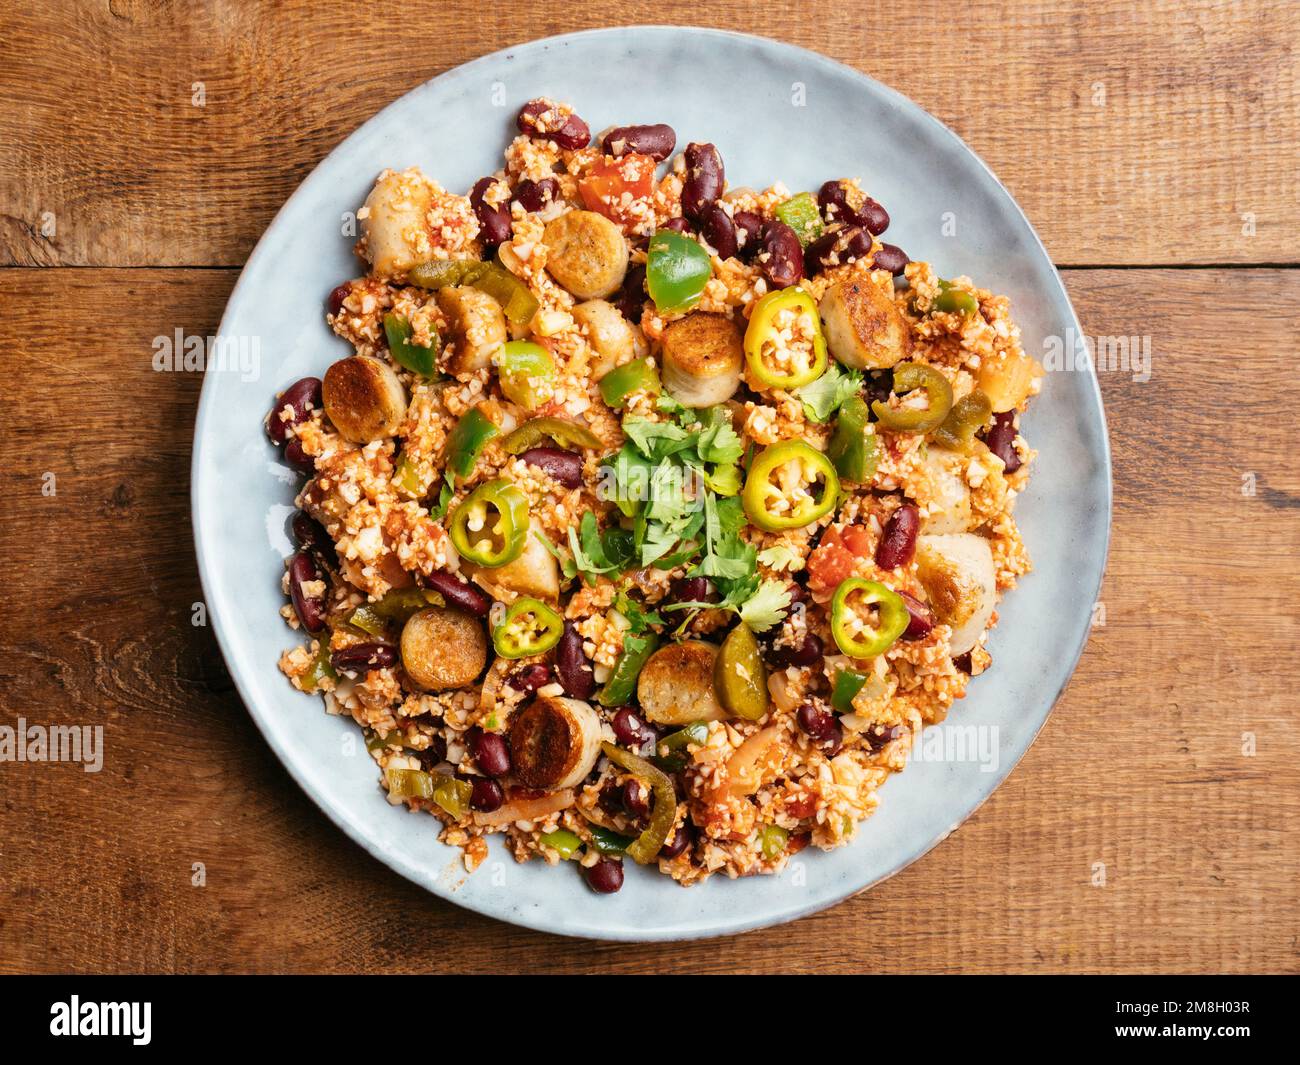 Plate with a cauliflower rice Jambalaya with vegan sausages. Stock Photo